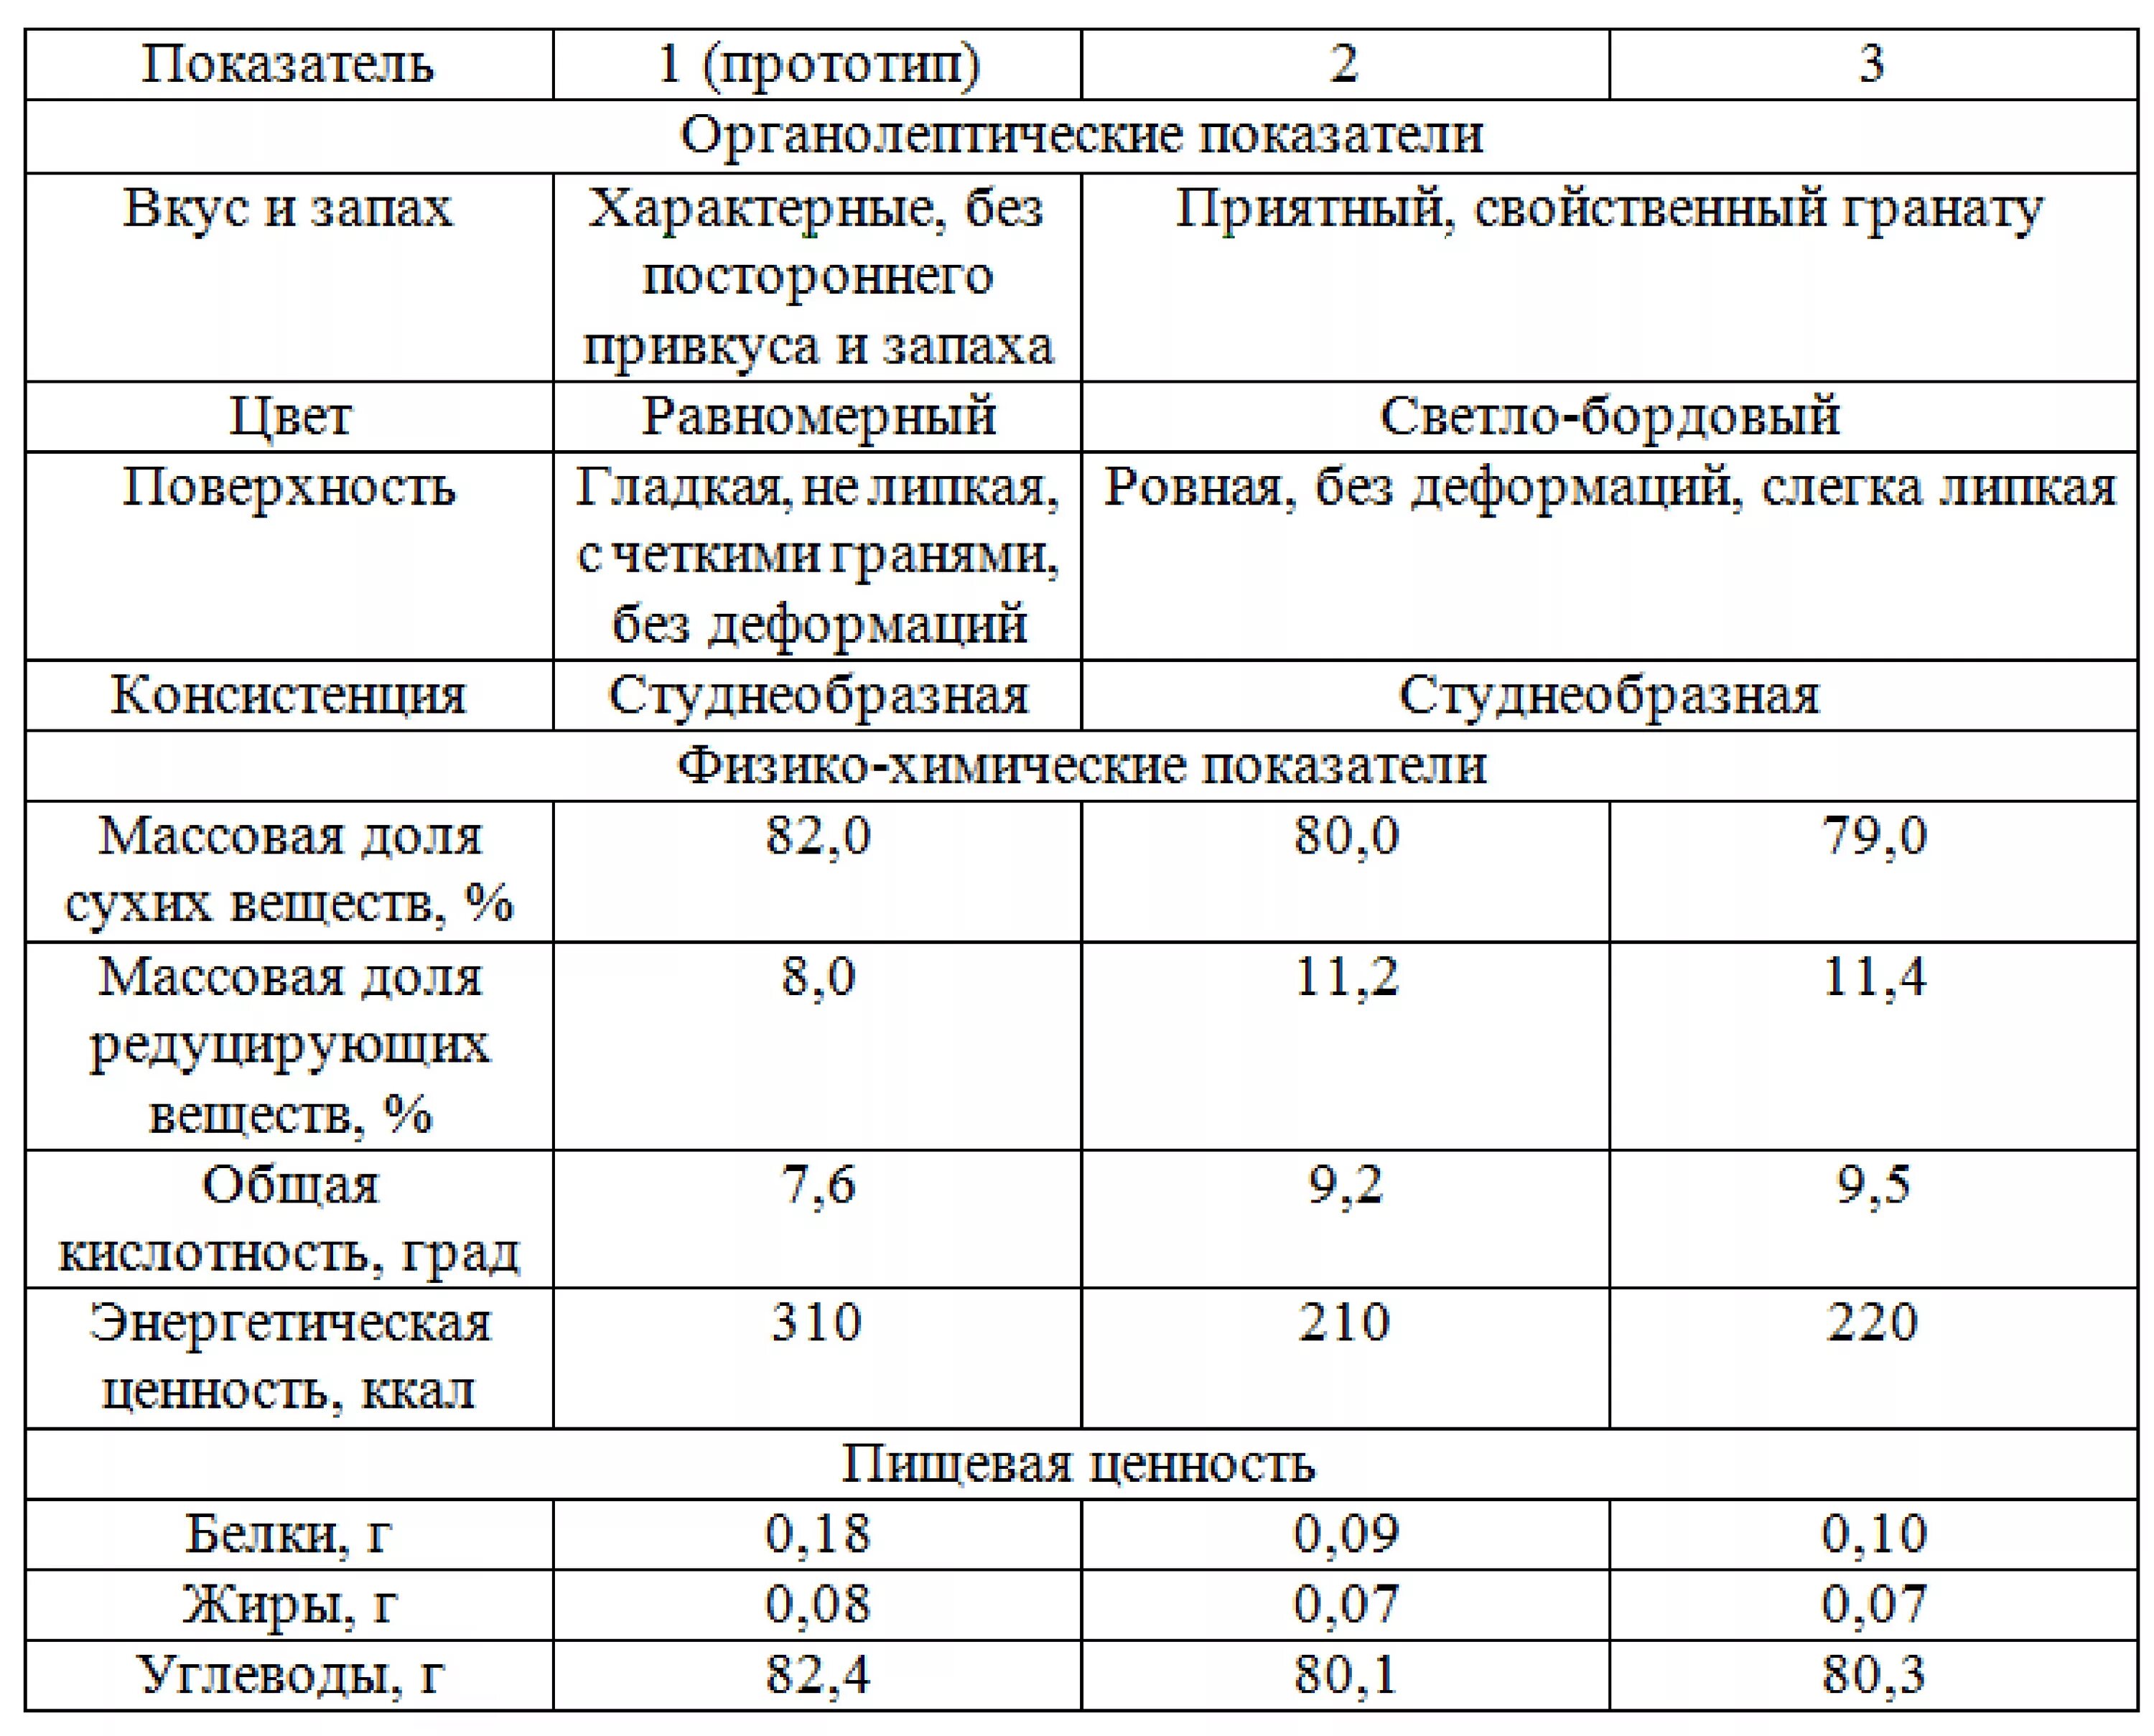 Физико-химические показатели мармелада таблица. Органолептика физико-химические показатели. Физико-химические показатели мармелада. Химические показатели качества.